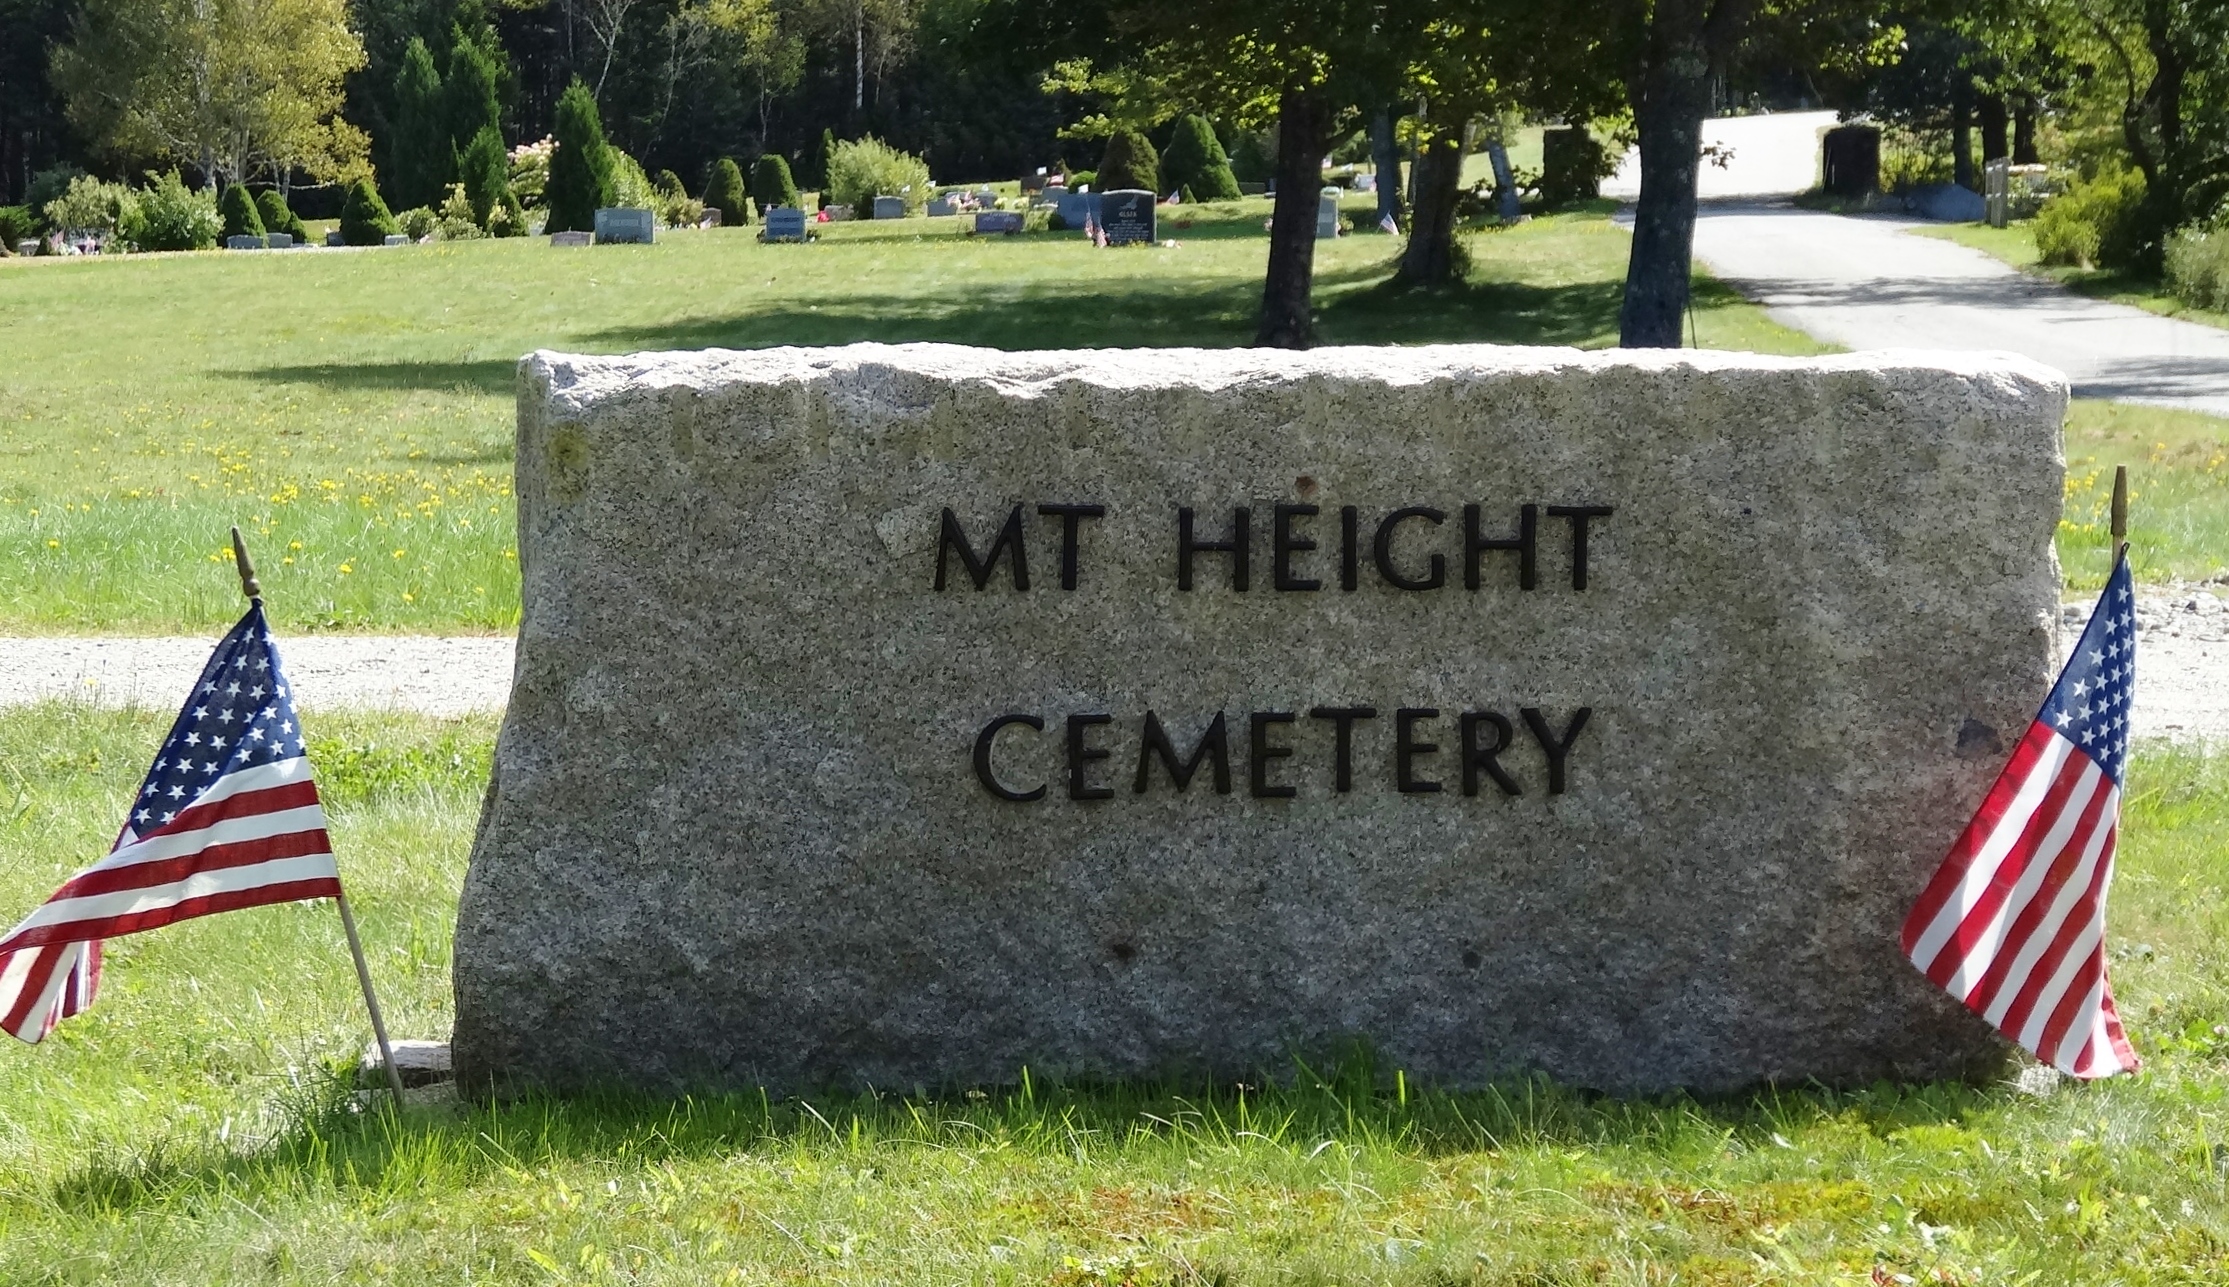 Mount Height Cemetery